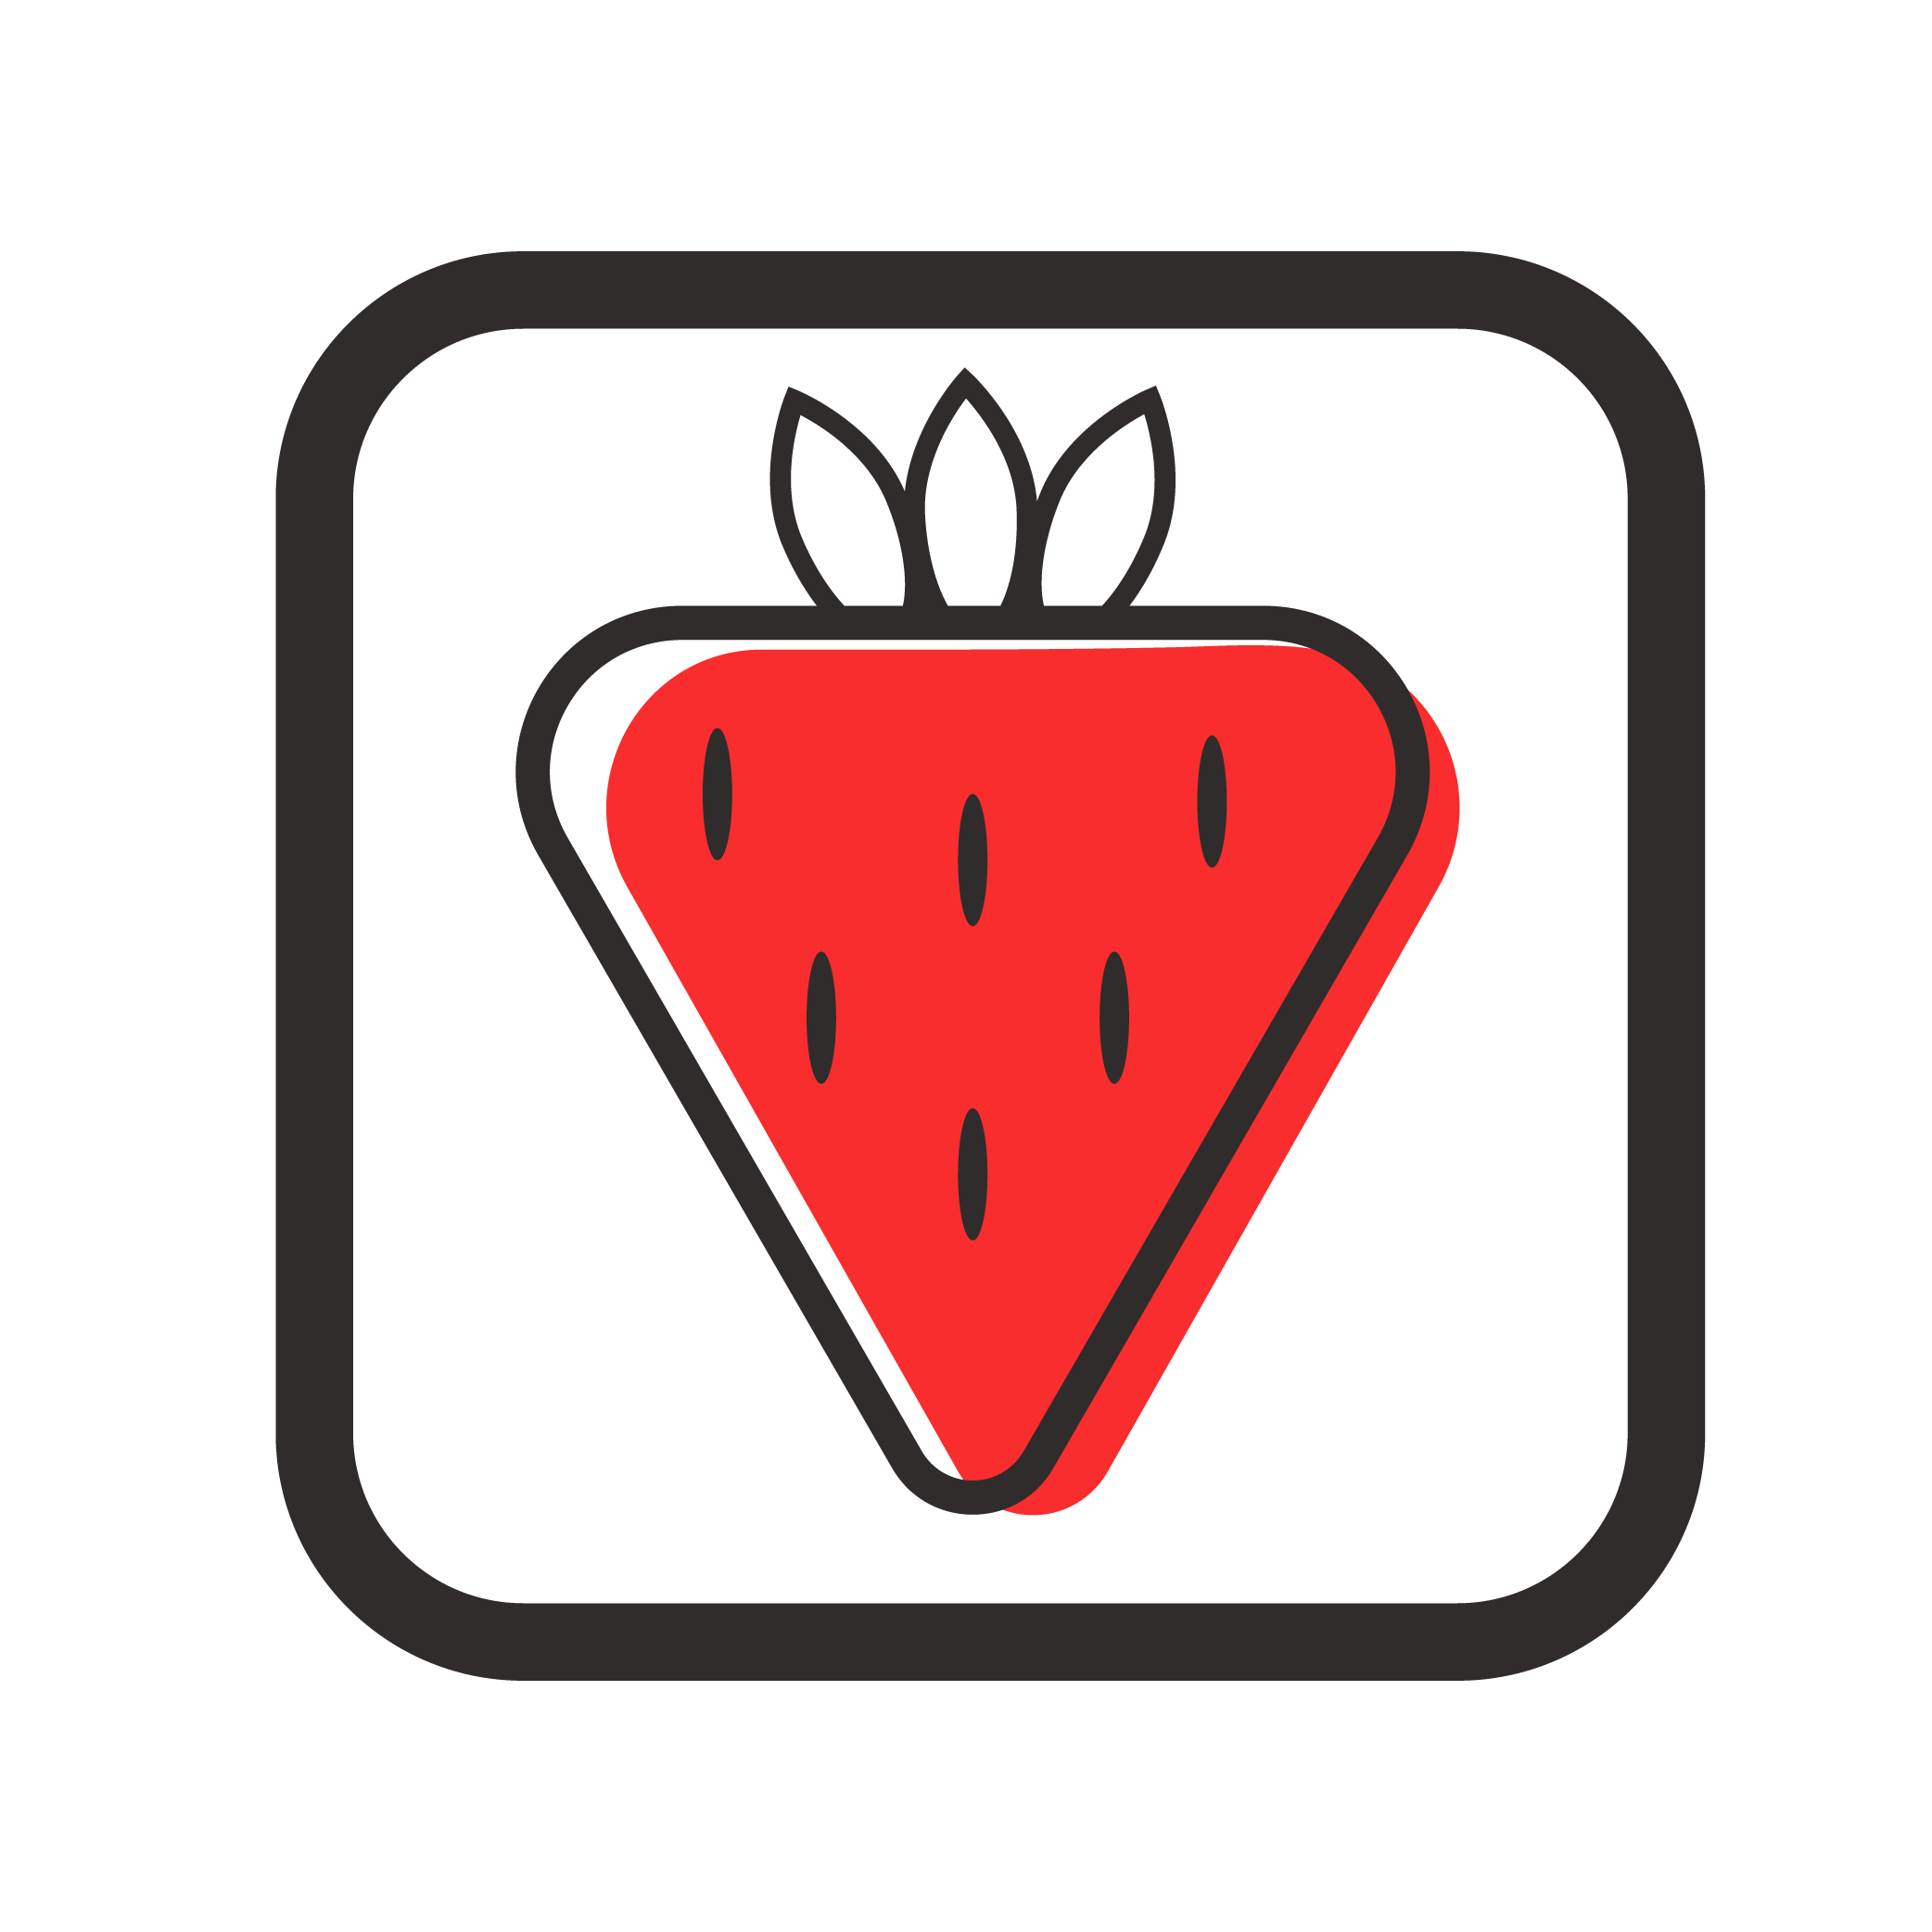 frut icons 09 493